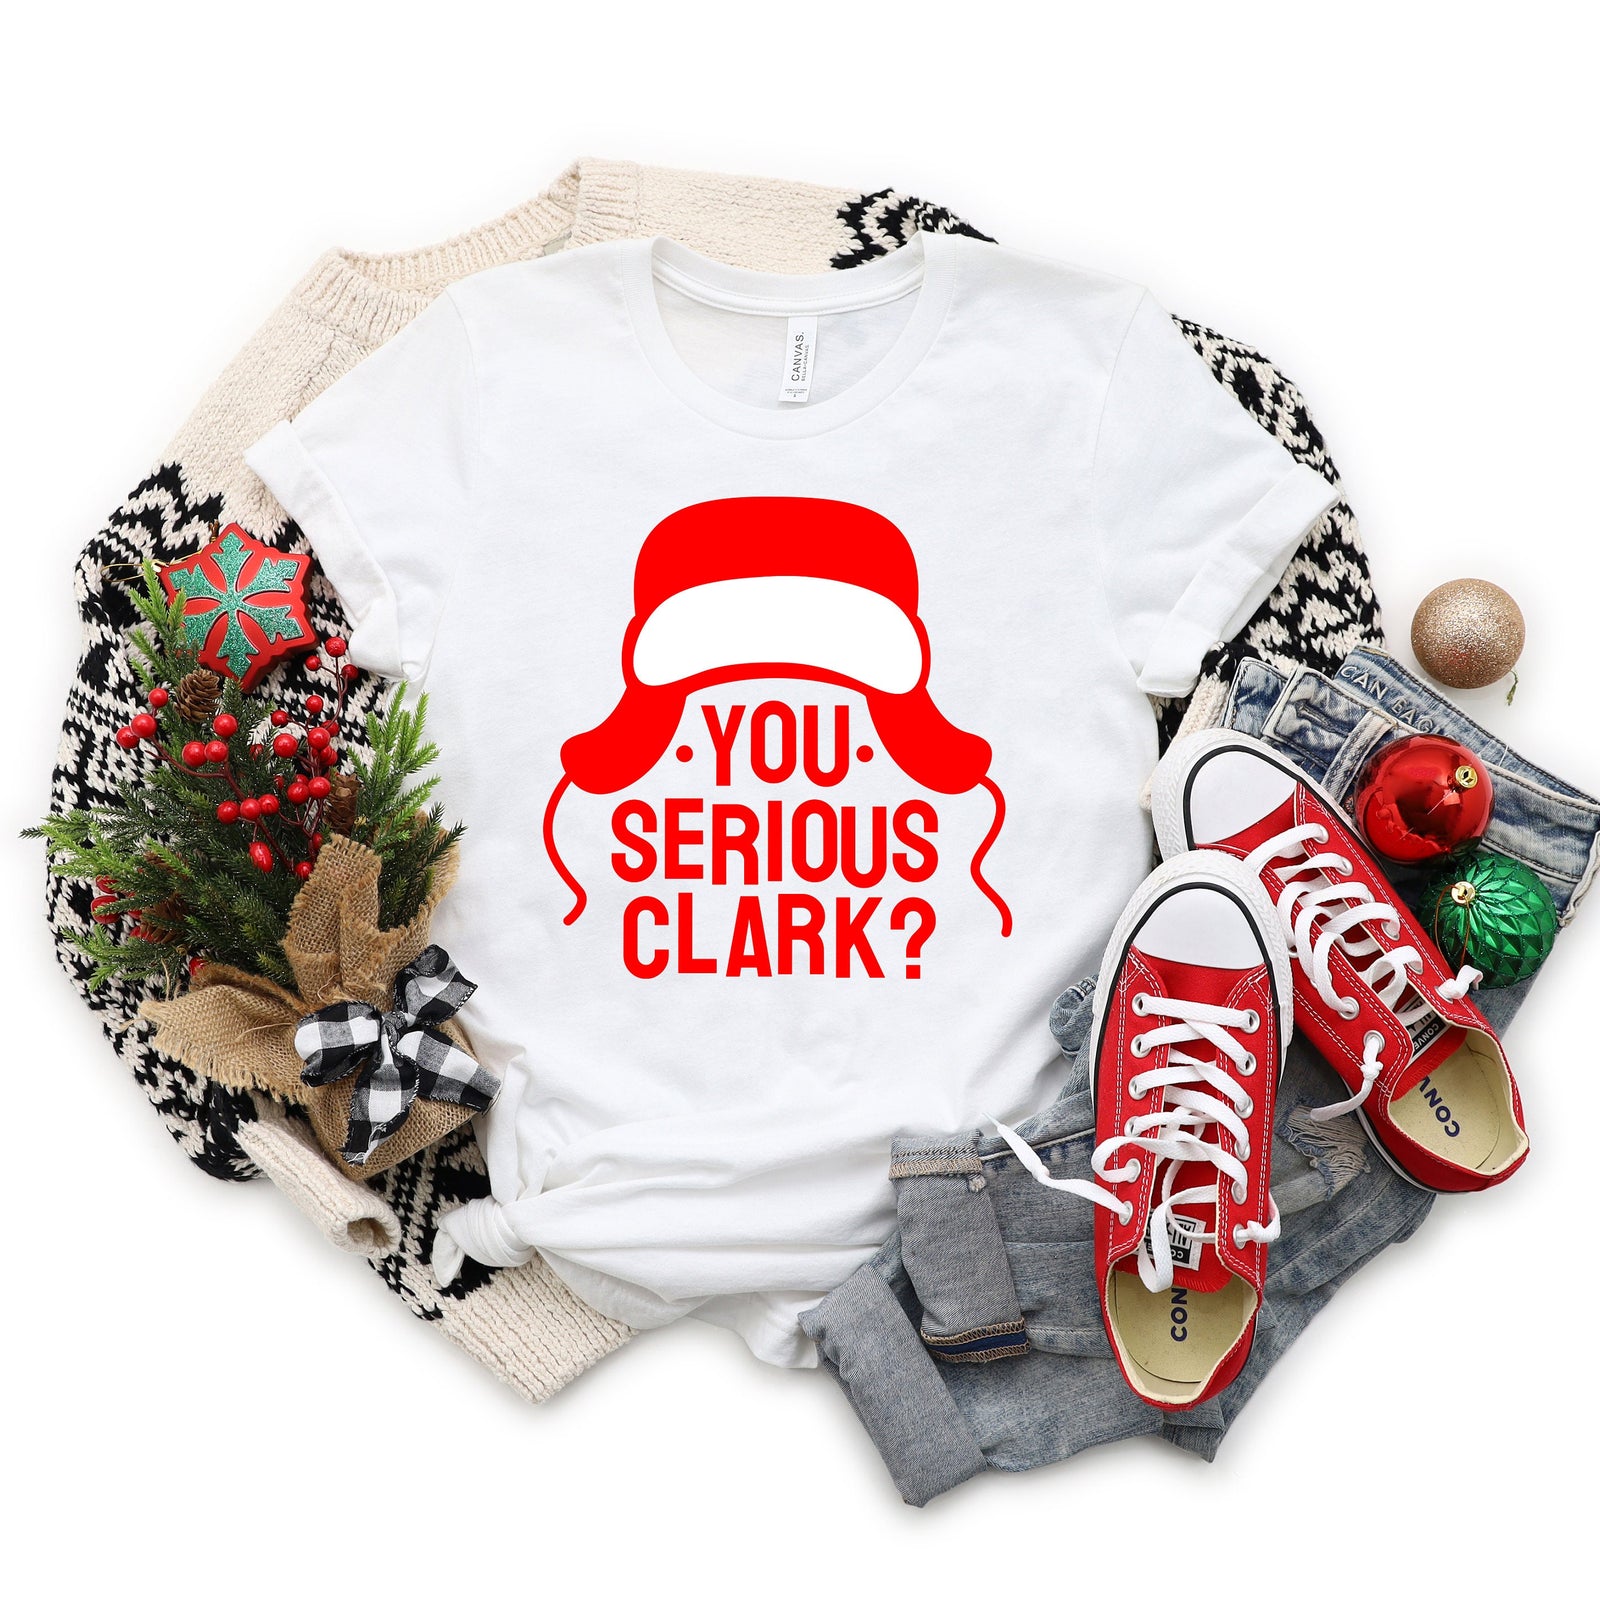 You Serious Clark?  Christmas Shirt - X-Mas T-Shirt - Holiday Movie Shirt - Funny T Shirt